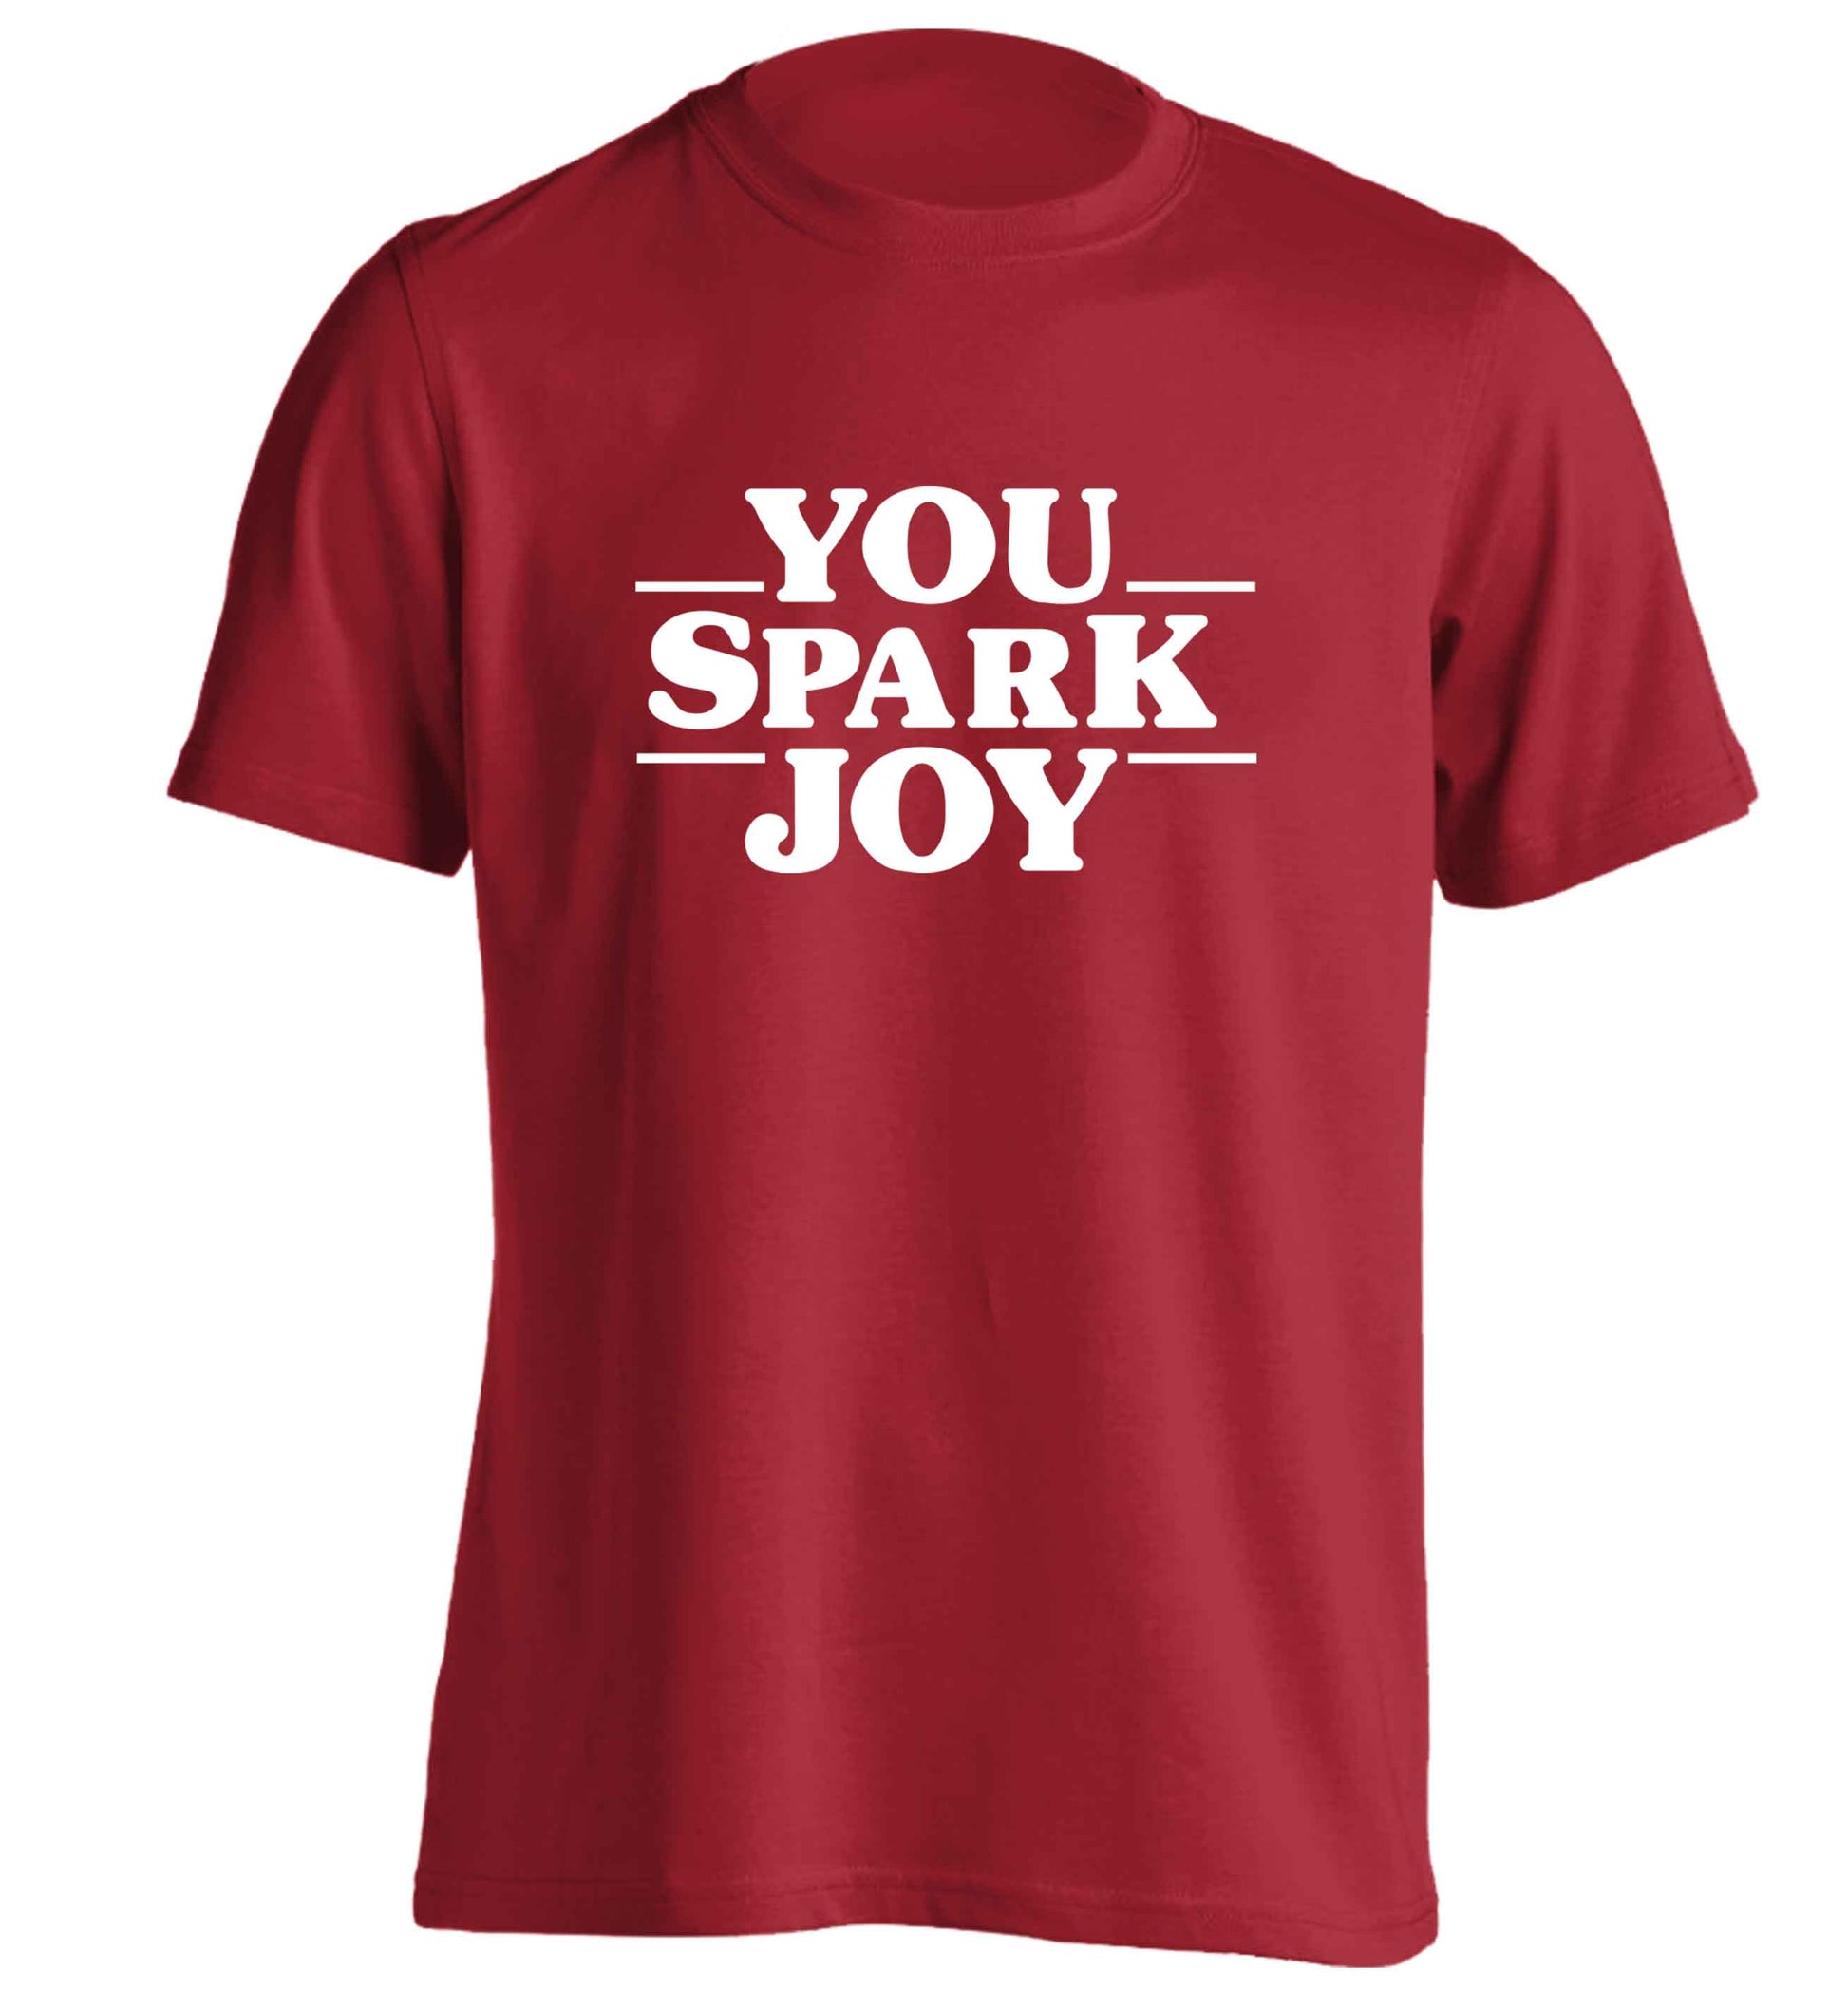 You spark joy adults unisex red Tshirt 2XL